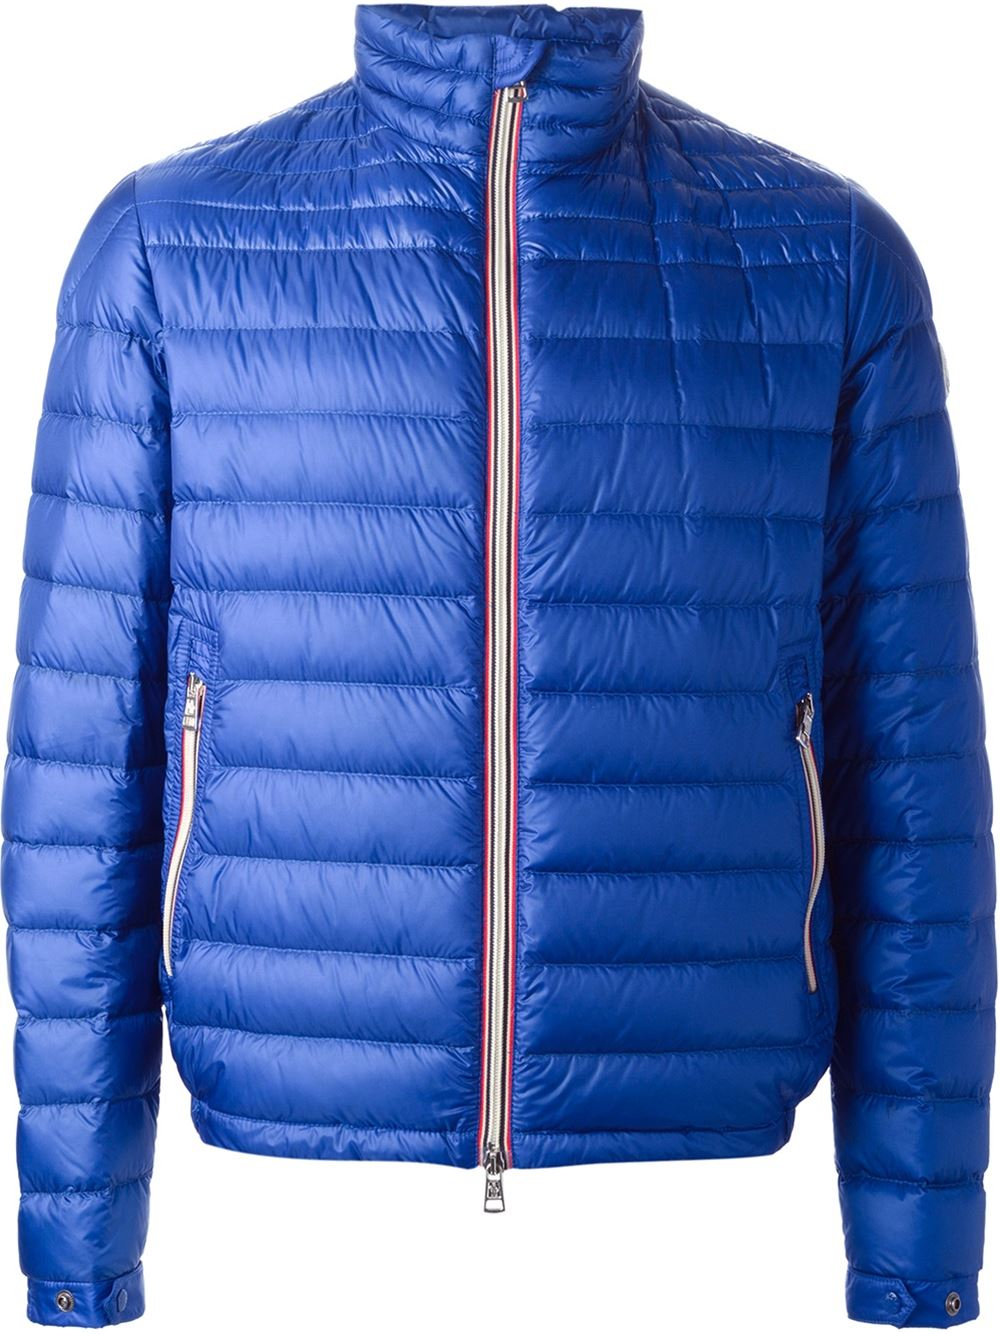 Lyst - Moncler 'Daniel' Padded Jacket in Blue for Men